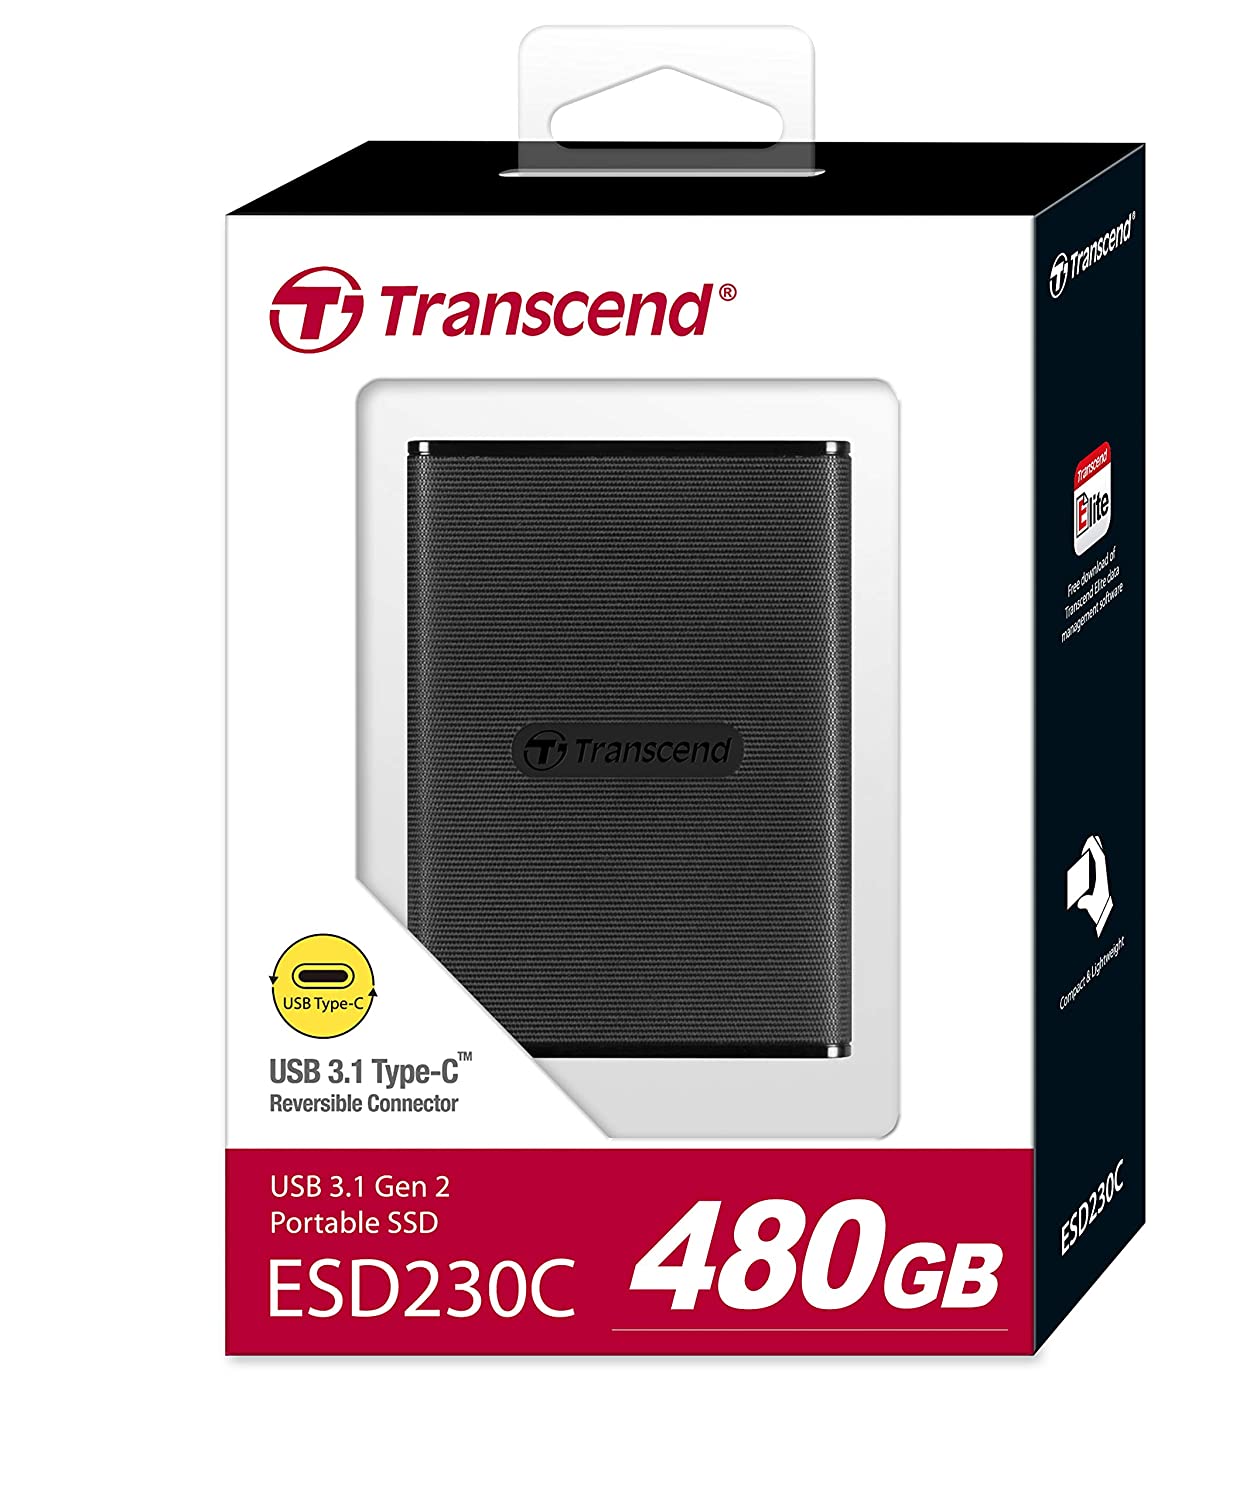 TRANSCEND 480GB USB 3.1 GEN 2 USB TYPE-C ESD230C PORTABLE SSD